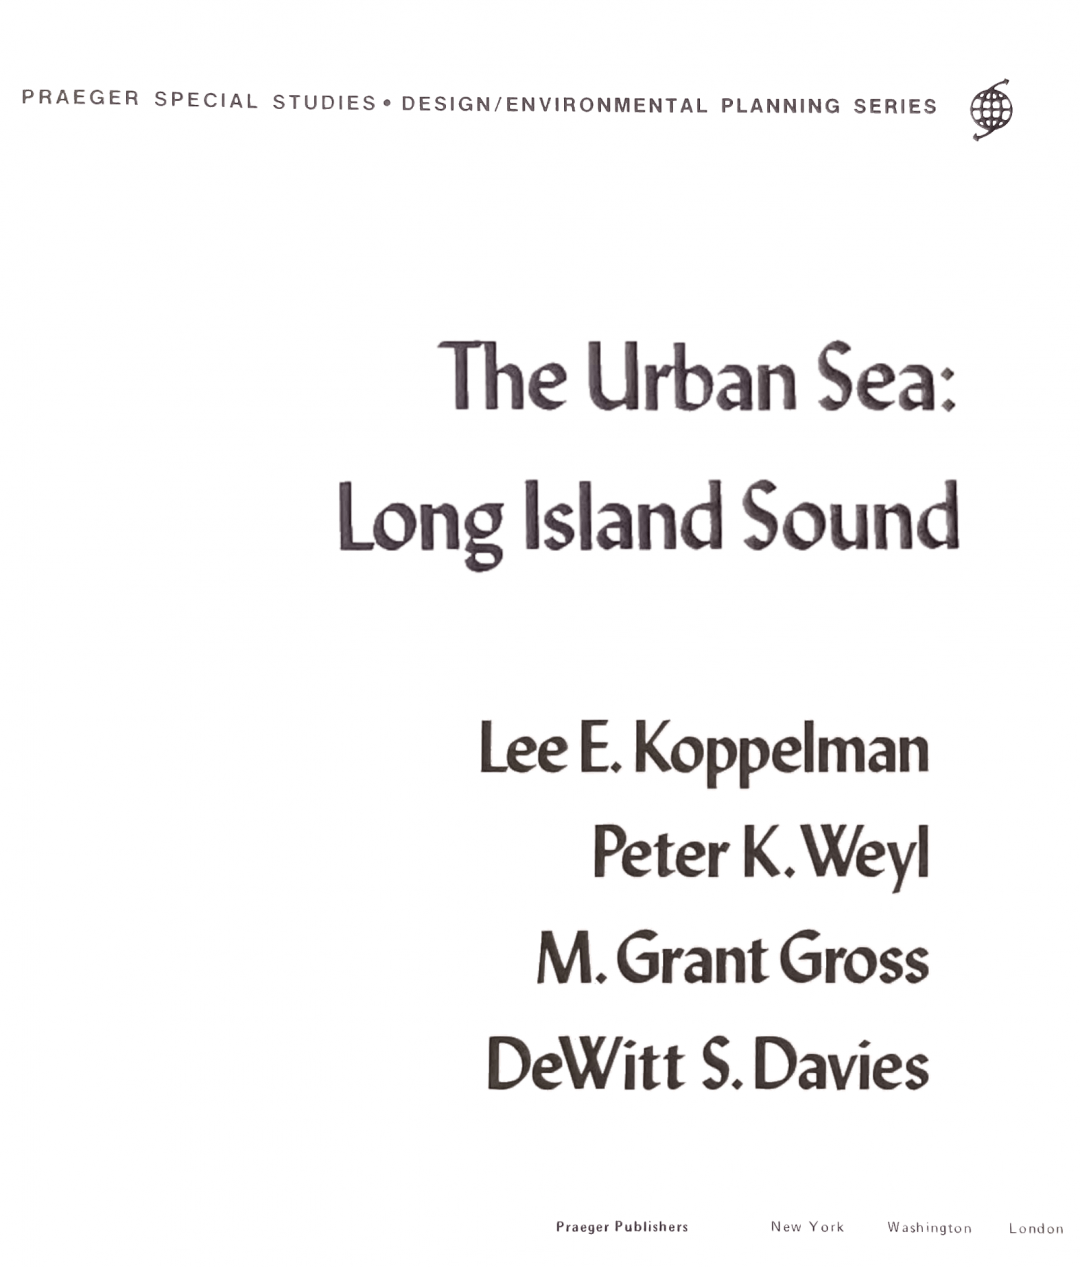 Koppleman, L. E., Weyl, P., Gross, M. G., and Davies, D. S. (1976).  The Urban Sea: Long Island Sound. Praeger. 223 pp.